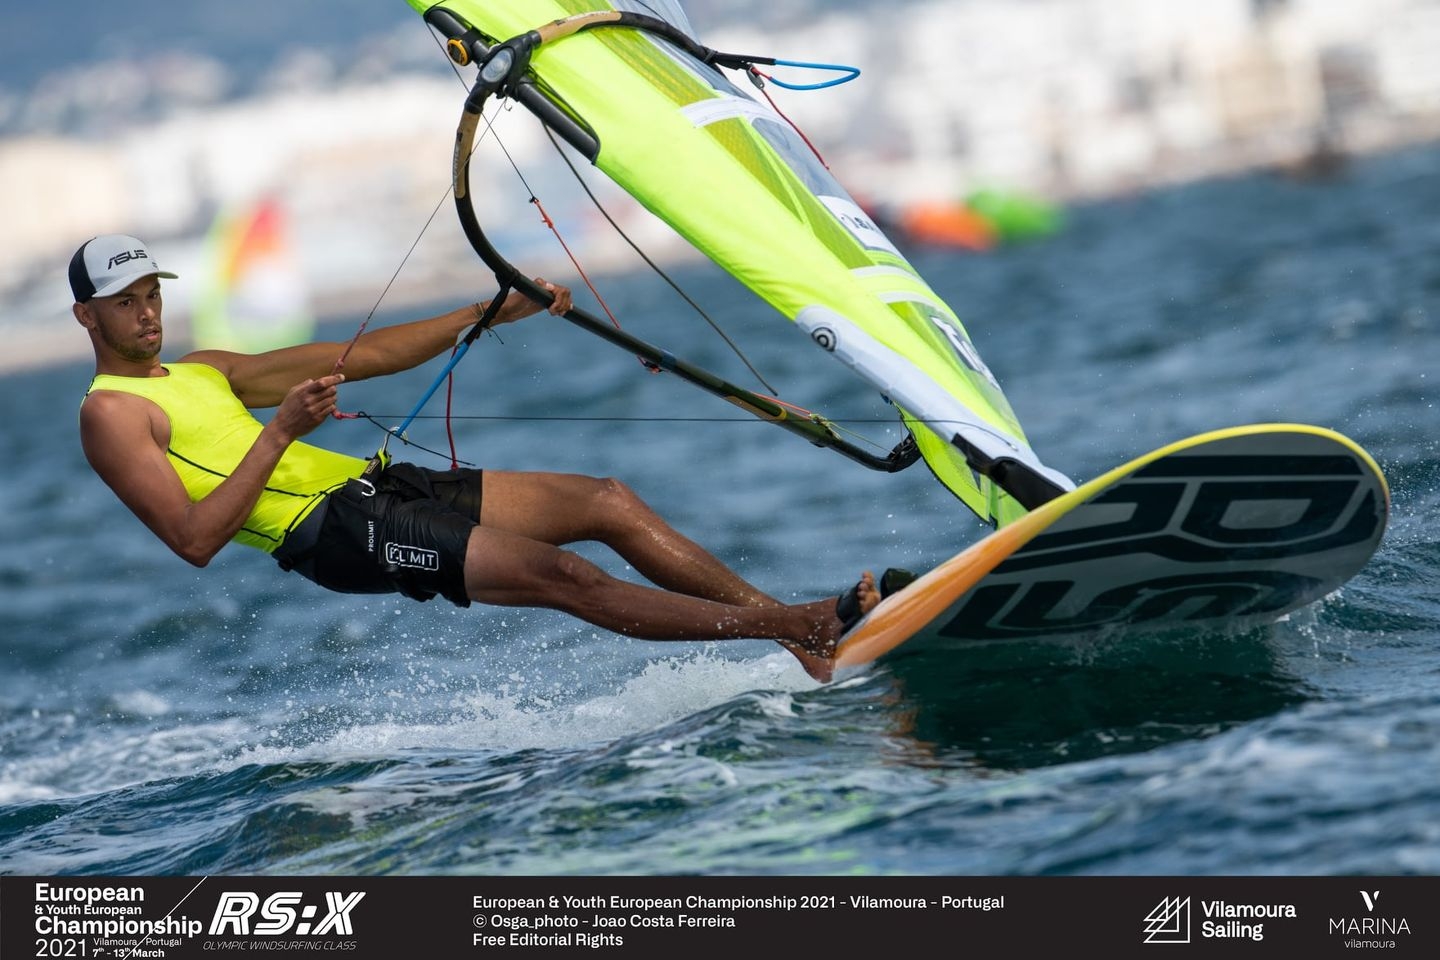  RS:XWindsurfing  European Championship 2021  Vilamoura POR  Final results